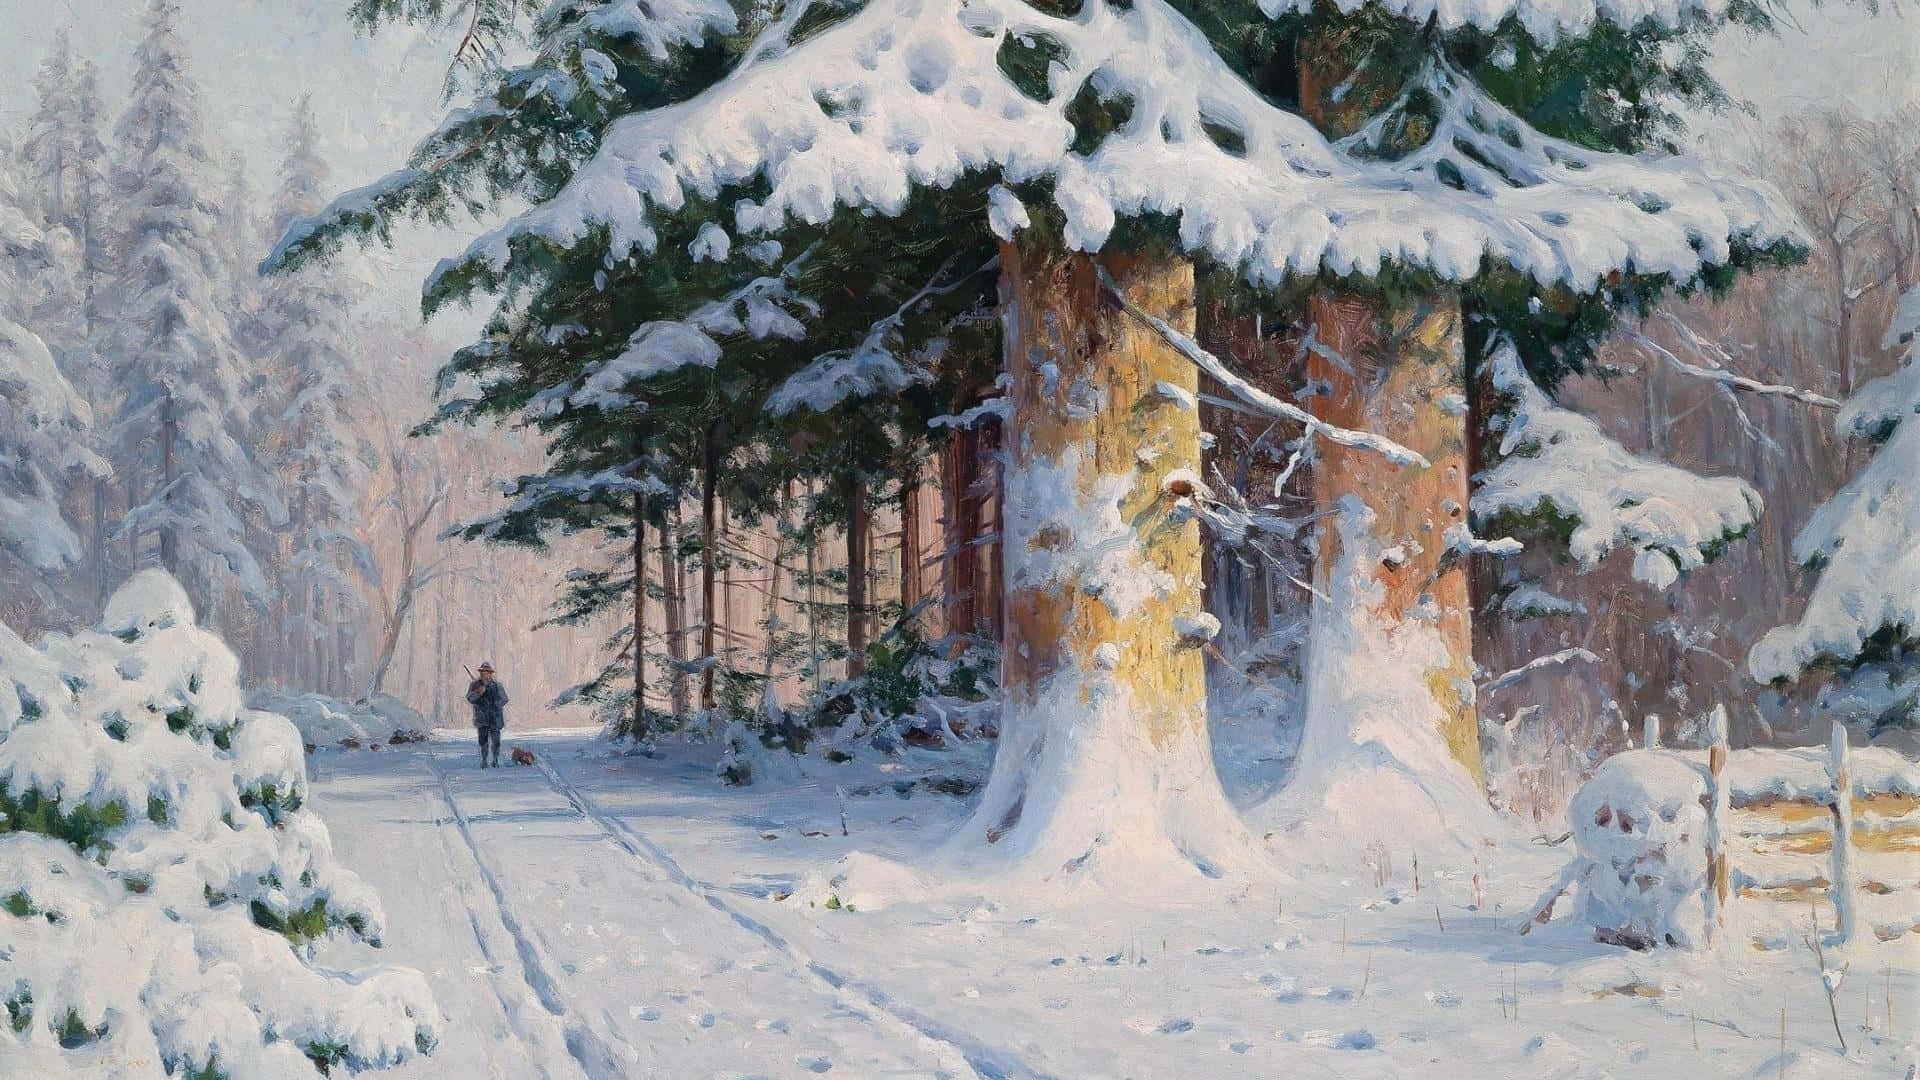 Stunning Winter Wonderland Painting Wallpaper